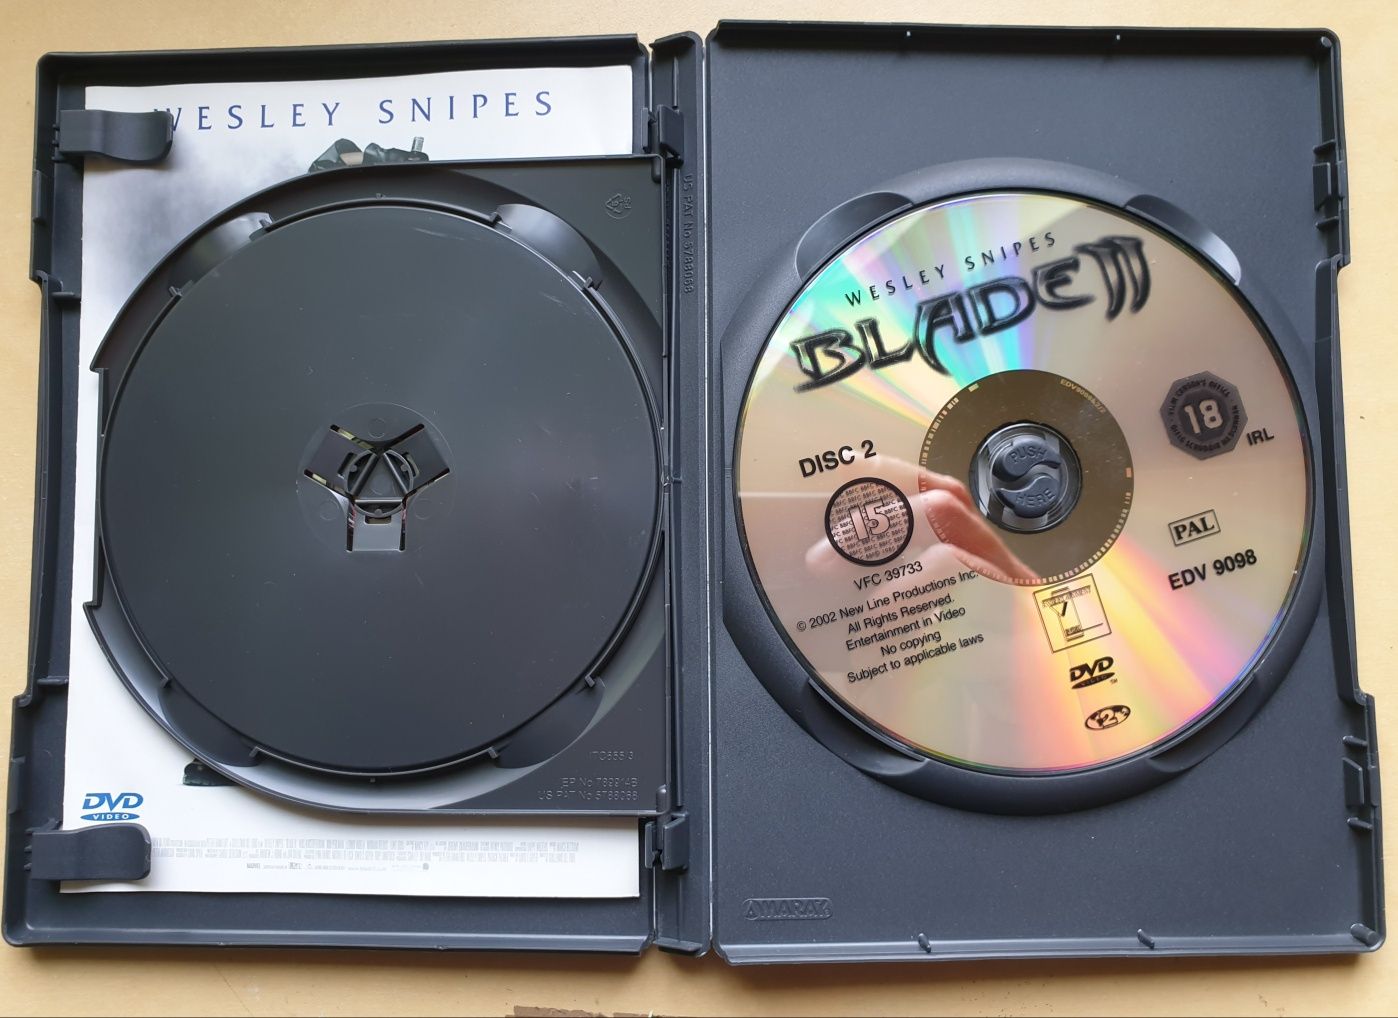 Film DVD Blade II Wesley Snipes 2 discs special editin